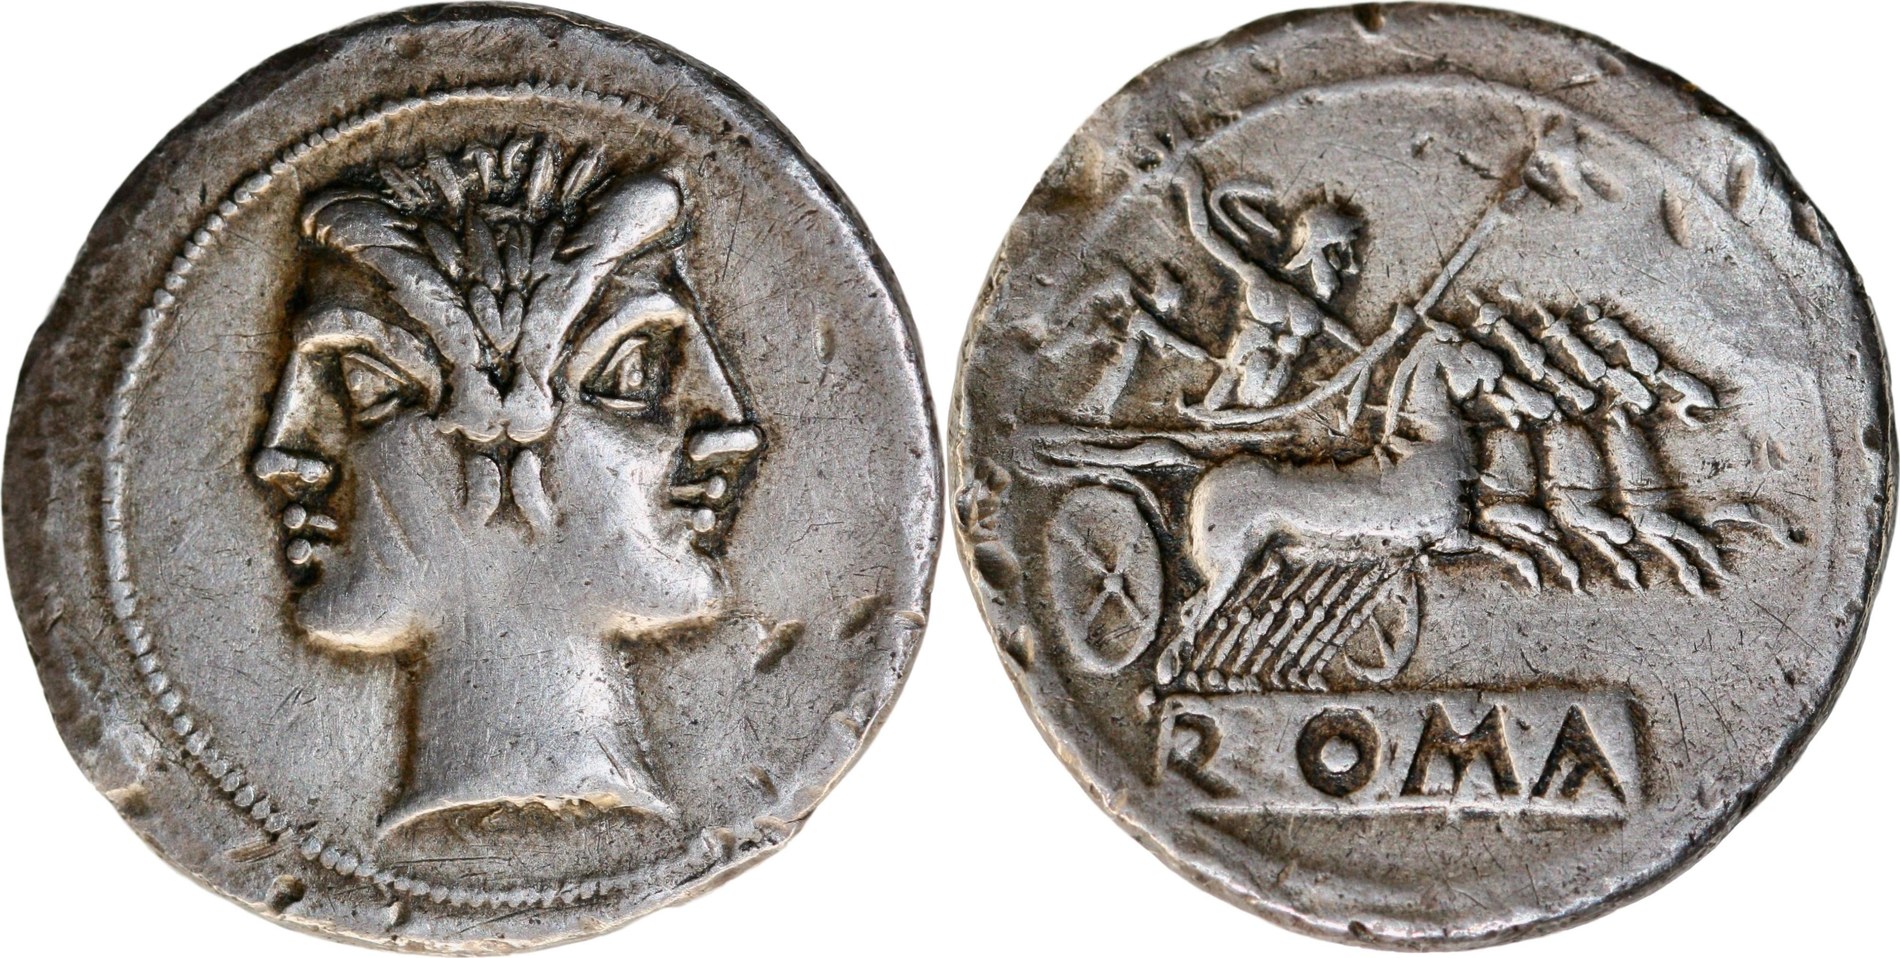 C bc v. Монета древний Рим SC. Монета Марс и Арес серебро. 206 Год до н.э. Avstria Thav ROMA Pro signo Tibi TVLNA.